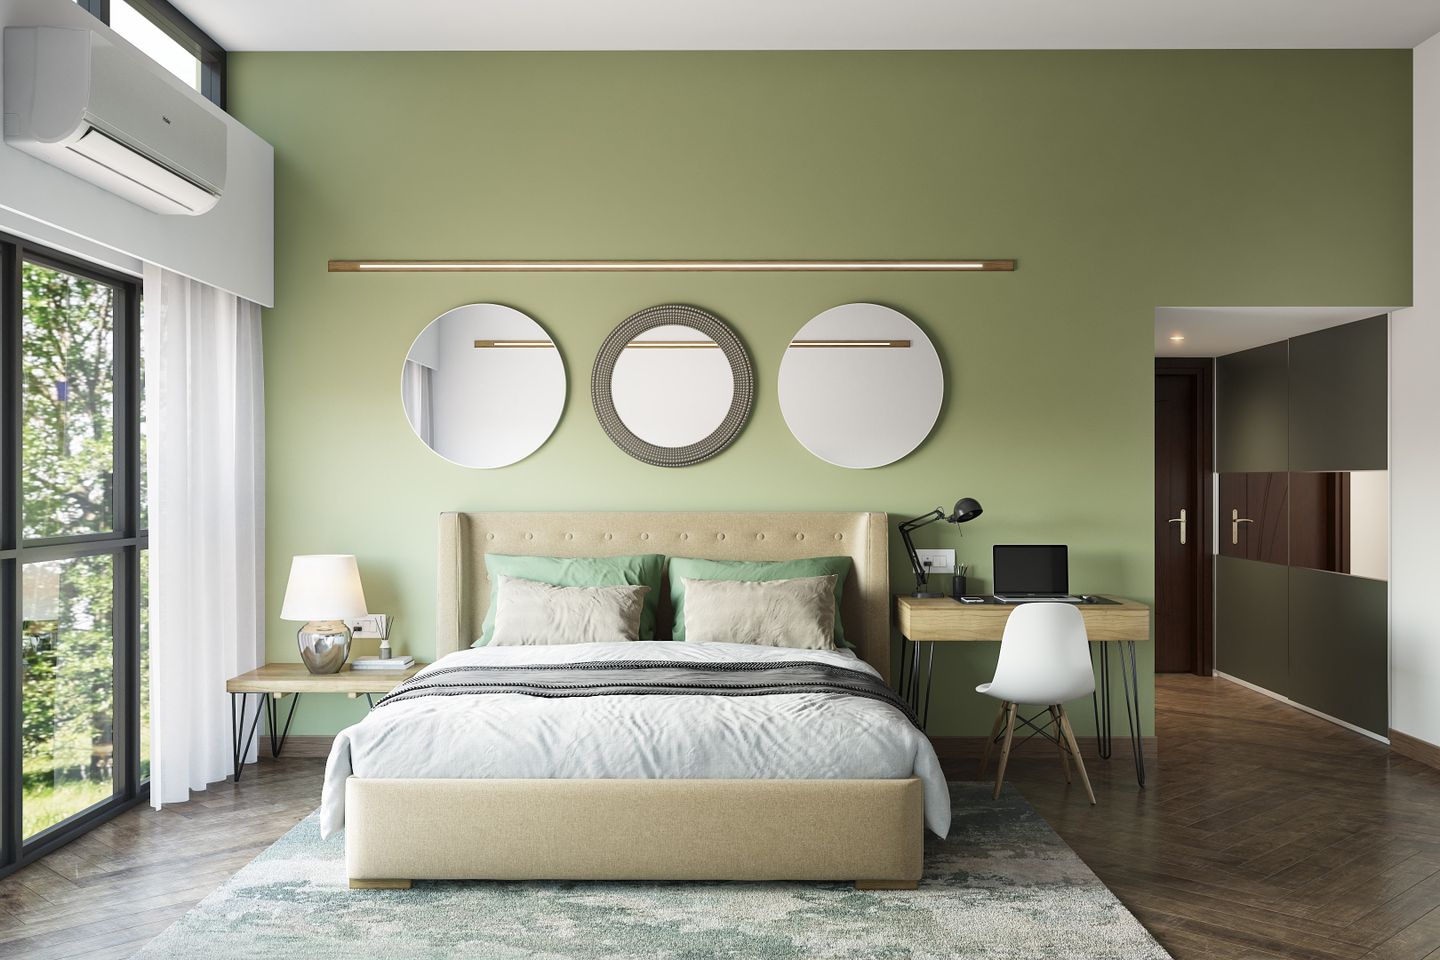 12X12 Ft Mid Century Modern Bedroom Design With Wooden TV Unit - Livspace